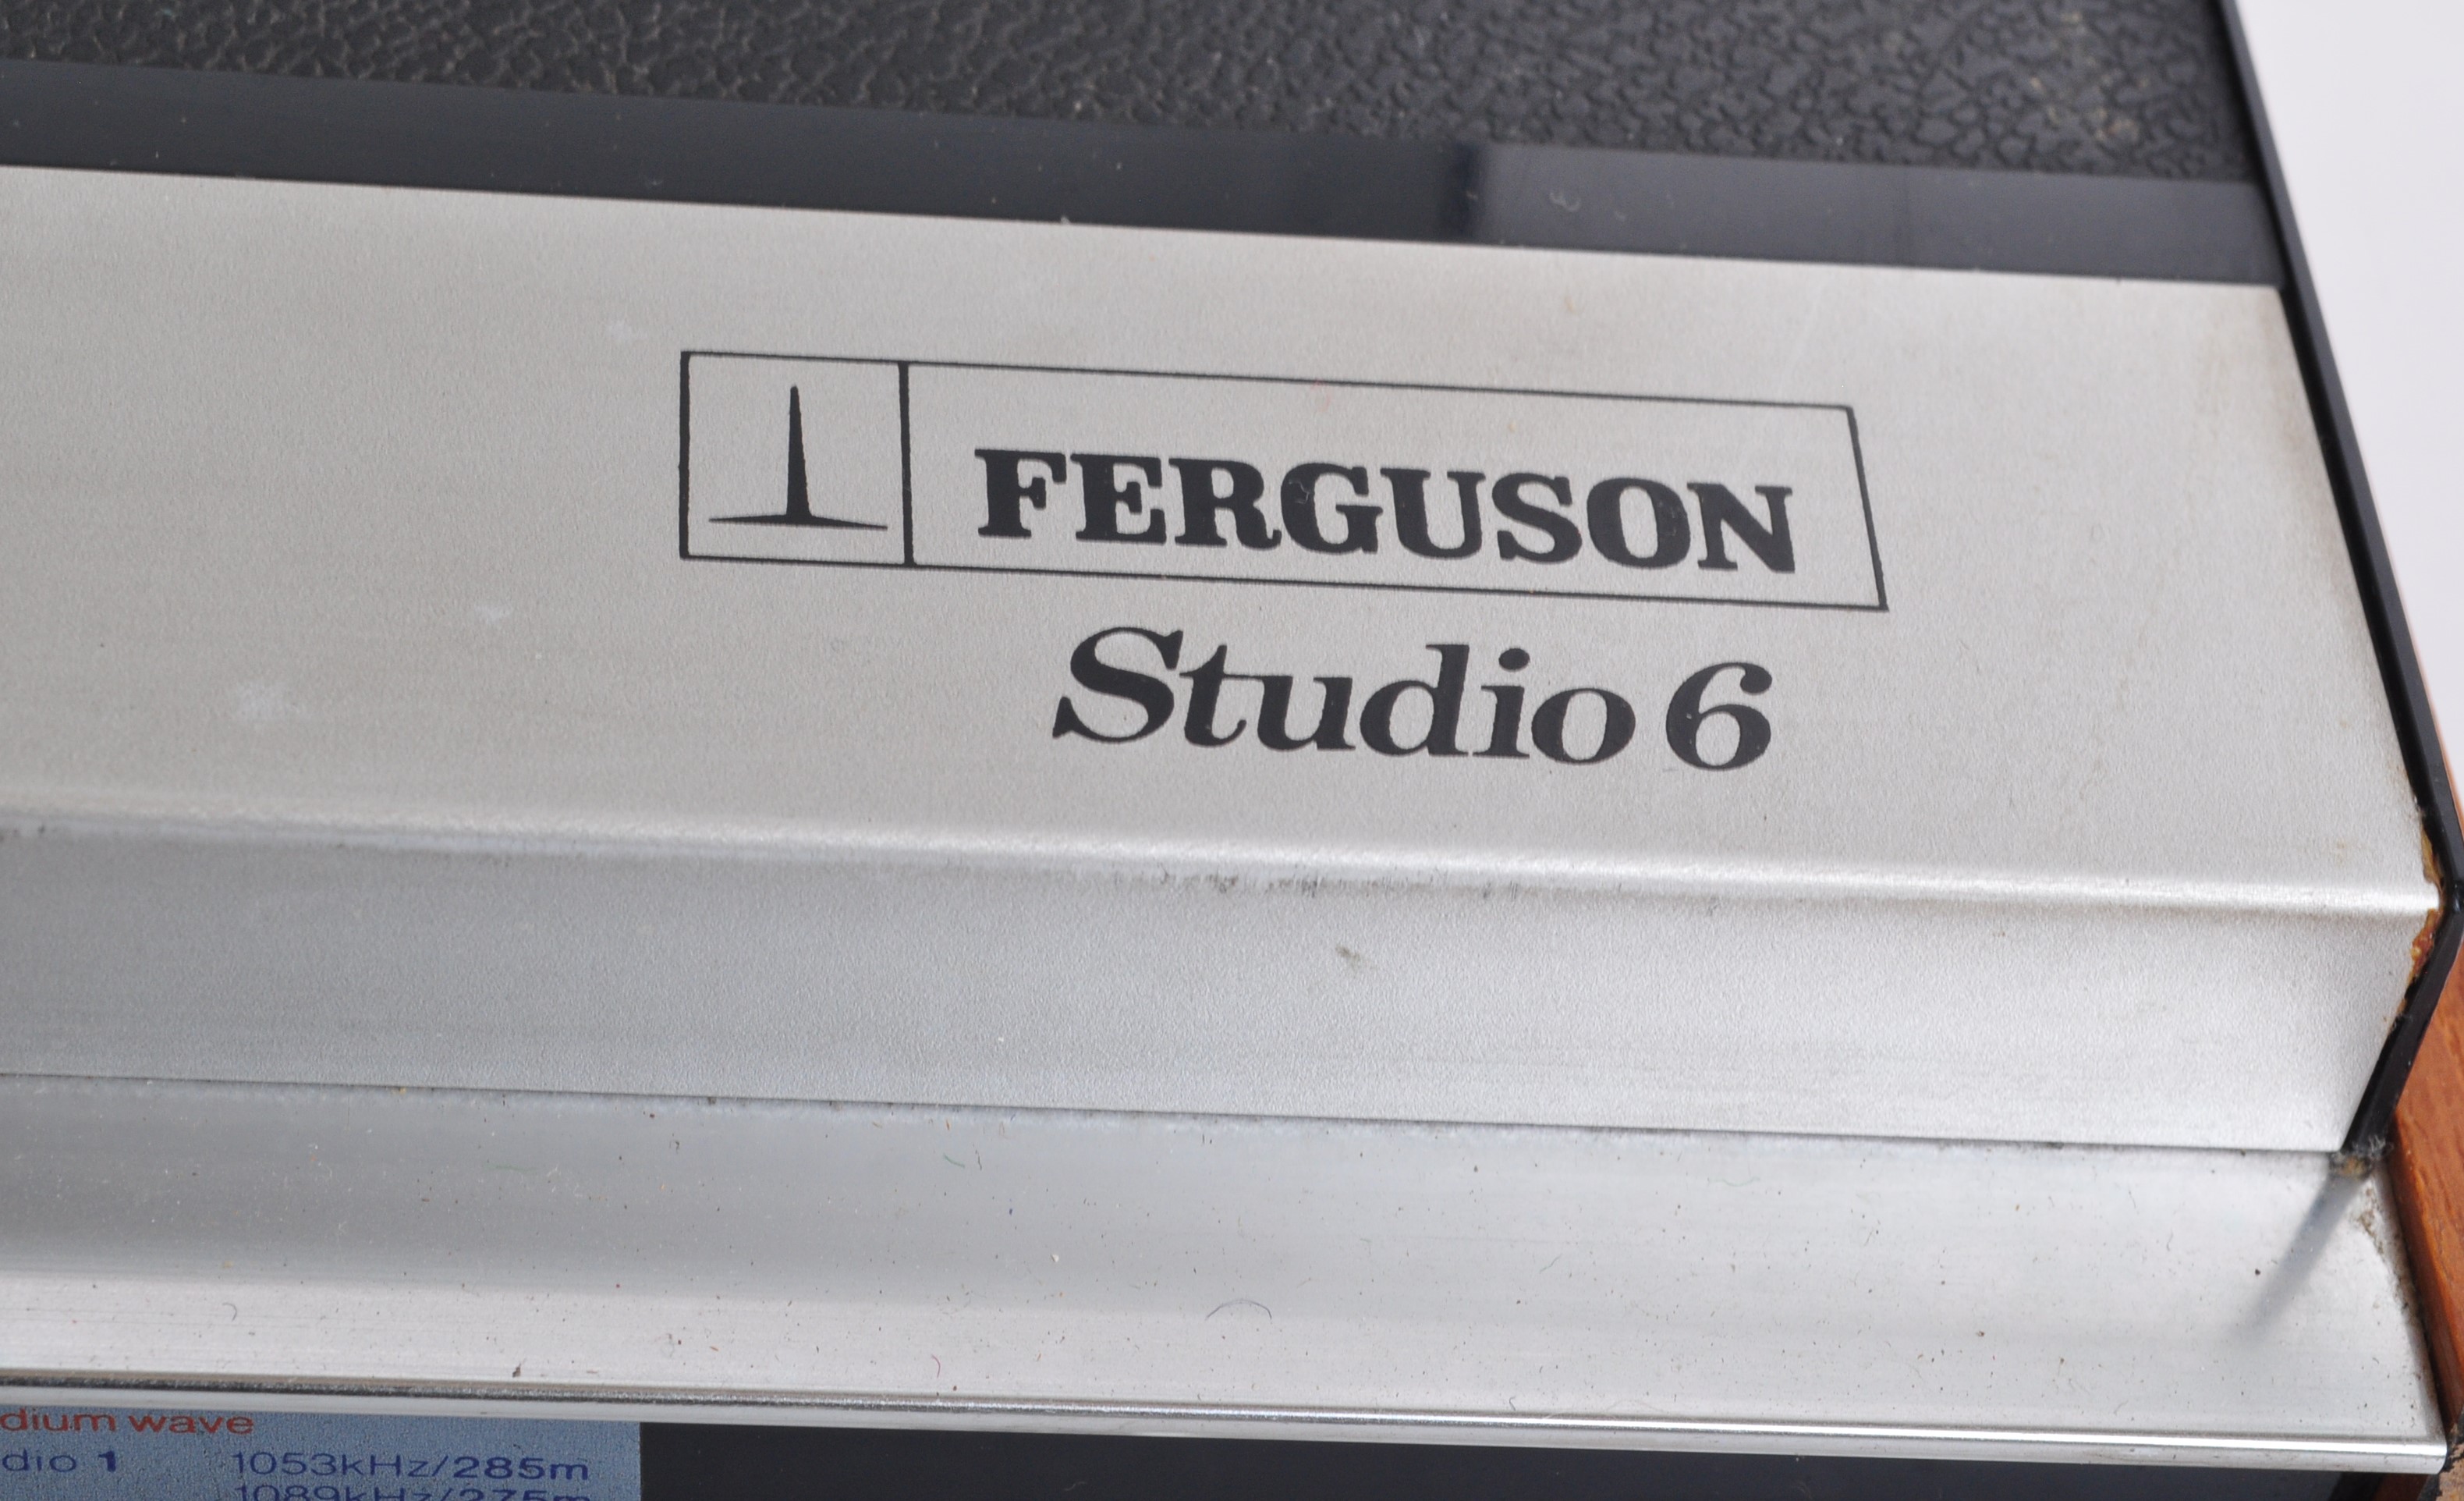 VINTAGE FERGUSON HIFI STUDIO 6 STEREO SYSTEM - Image 6 of 9